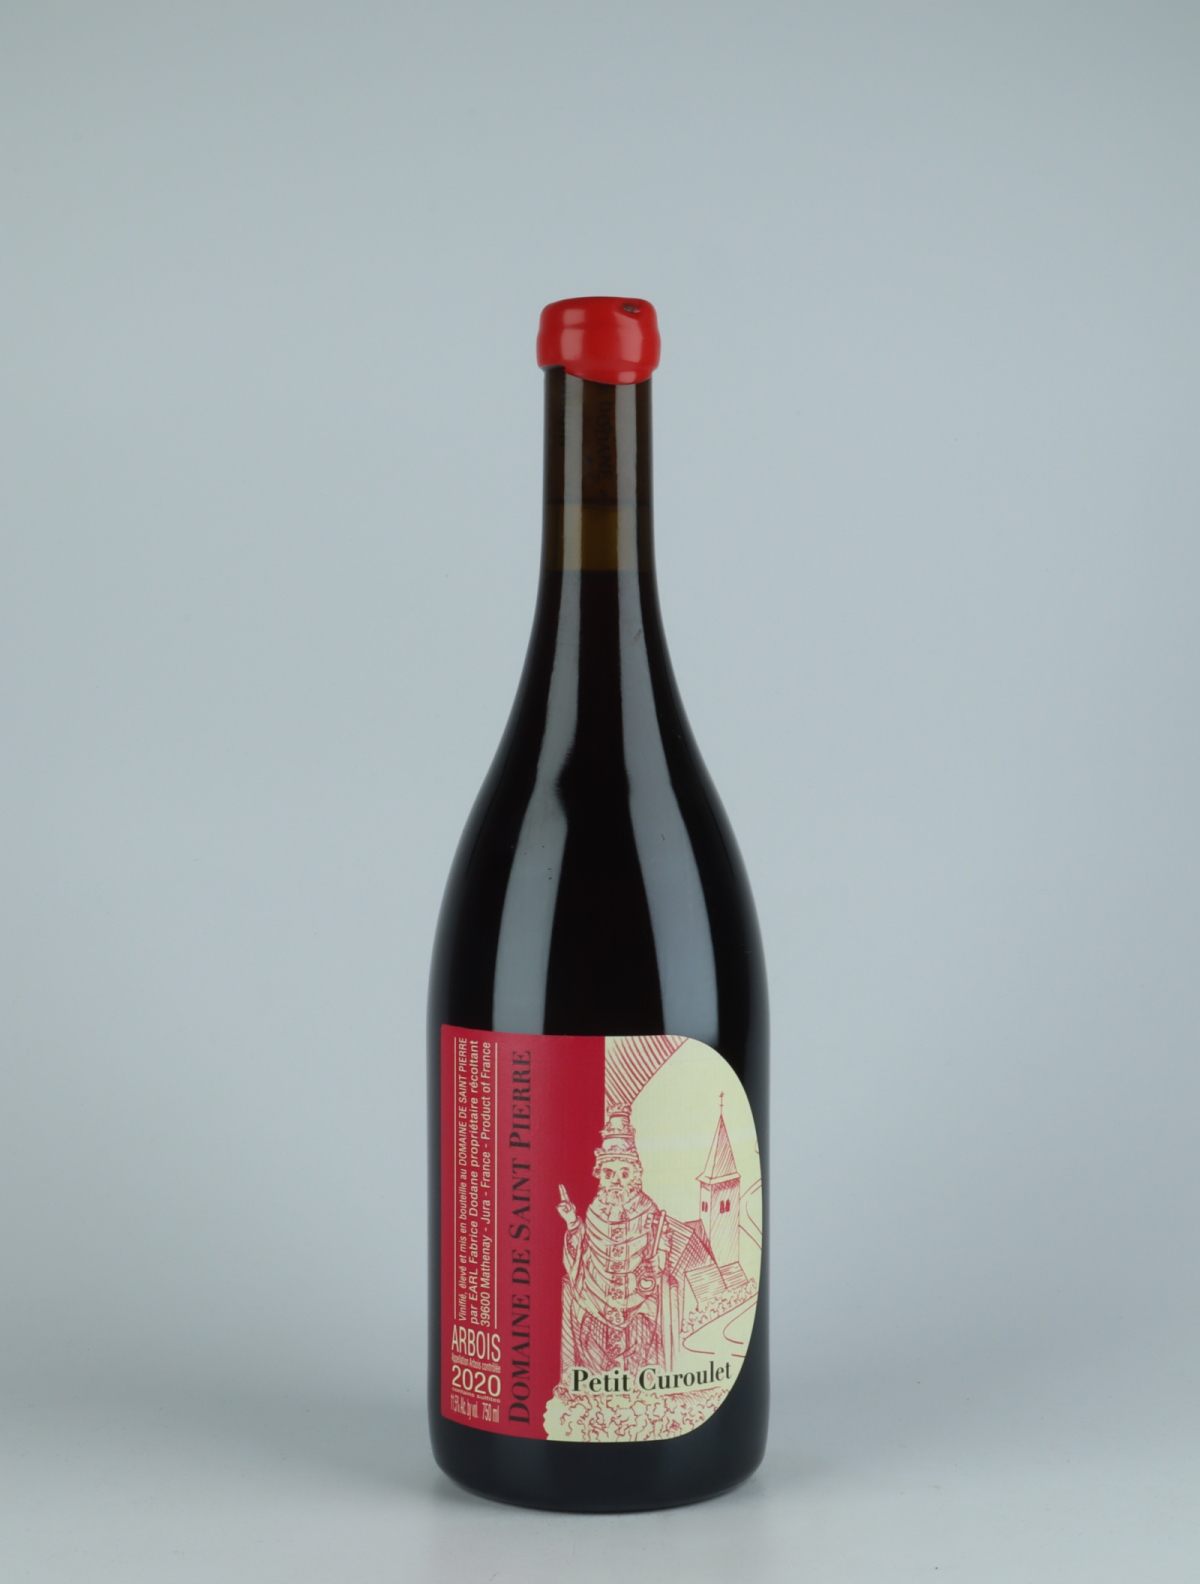 En flaske 2020 Arbois Rouge - Petit Curoulet Rødvin fra Domaine de Saint Pierre, Jura i Frankrig